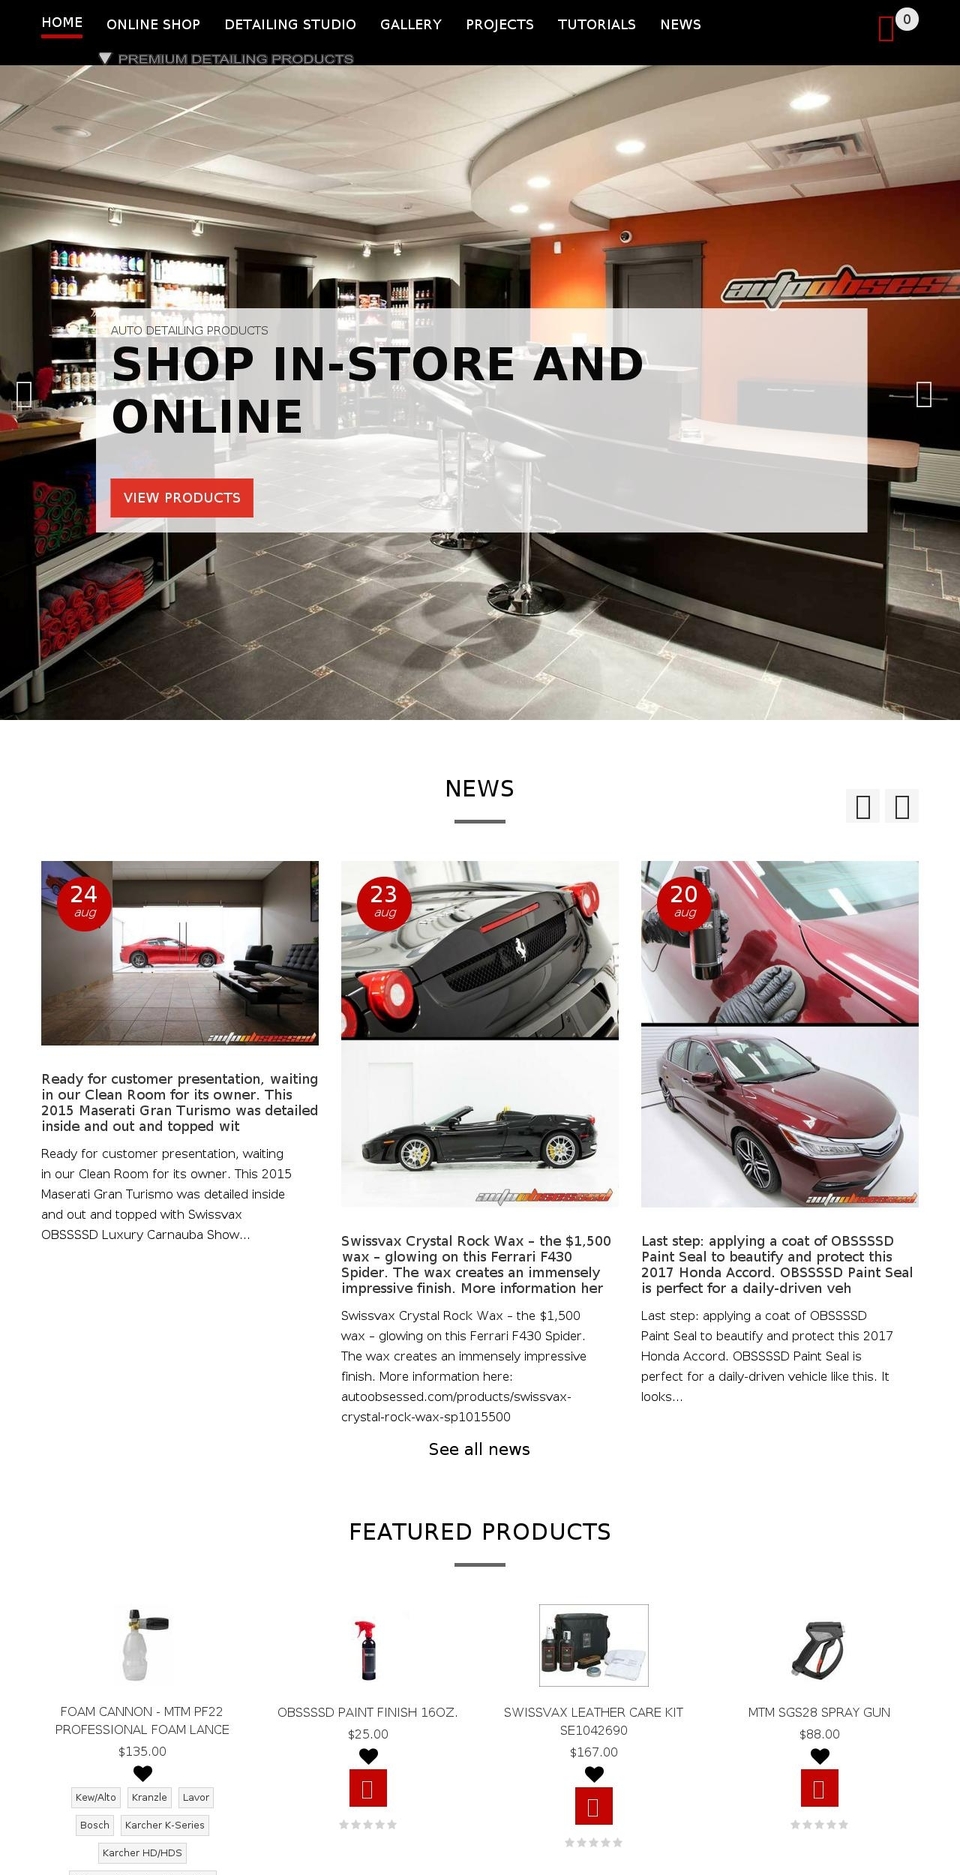 vehicleobsessed.net shopify website screenshot